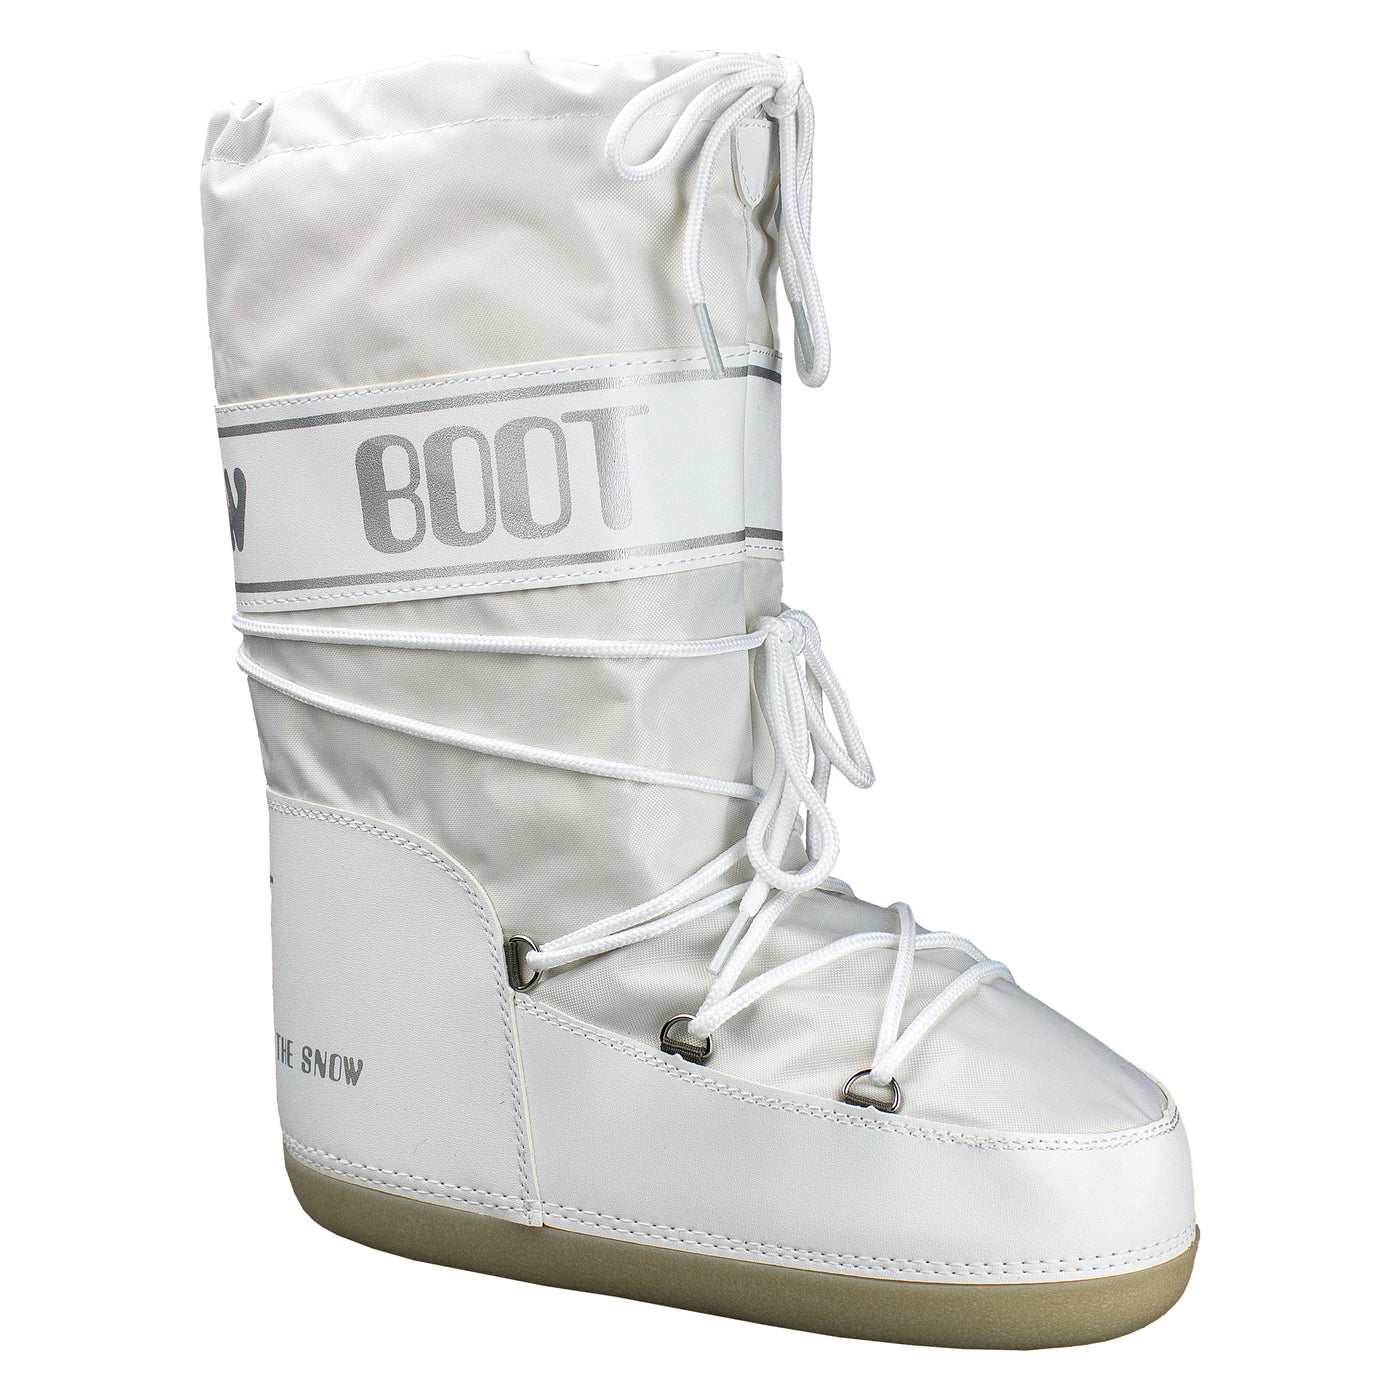 Manbi Adult Snow Boot White